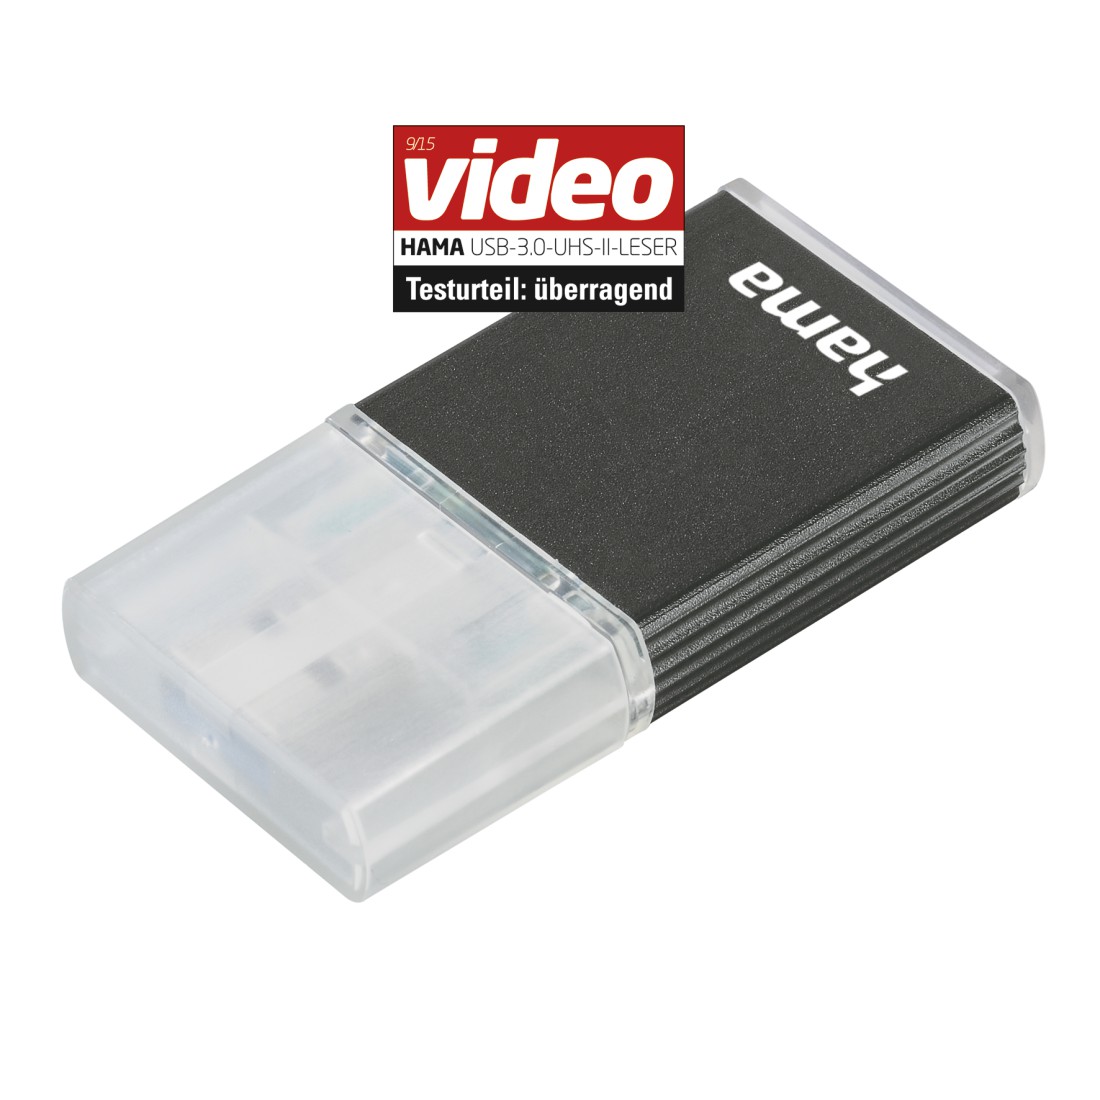 USB-3.0-UHS-II-Kartenleser, SD, Alu, Anthrazit | Hama